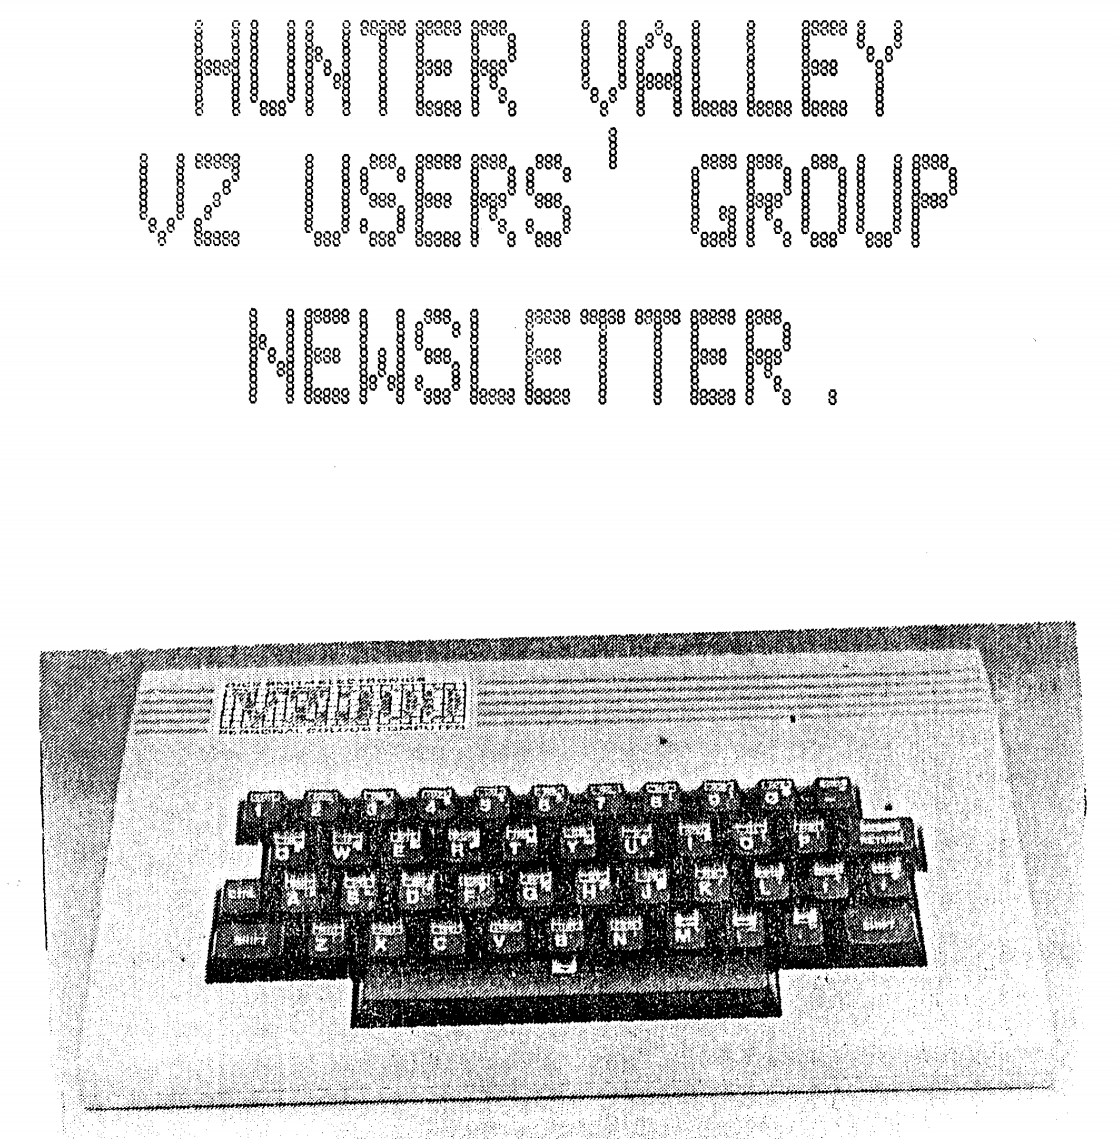 Hunter Valley VZ User Group Newsletters by Joe Leon